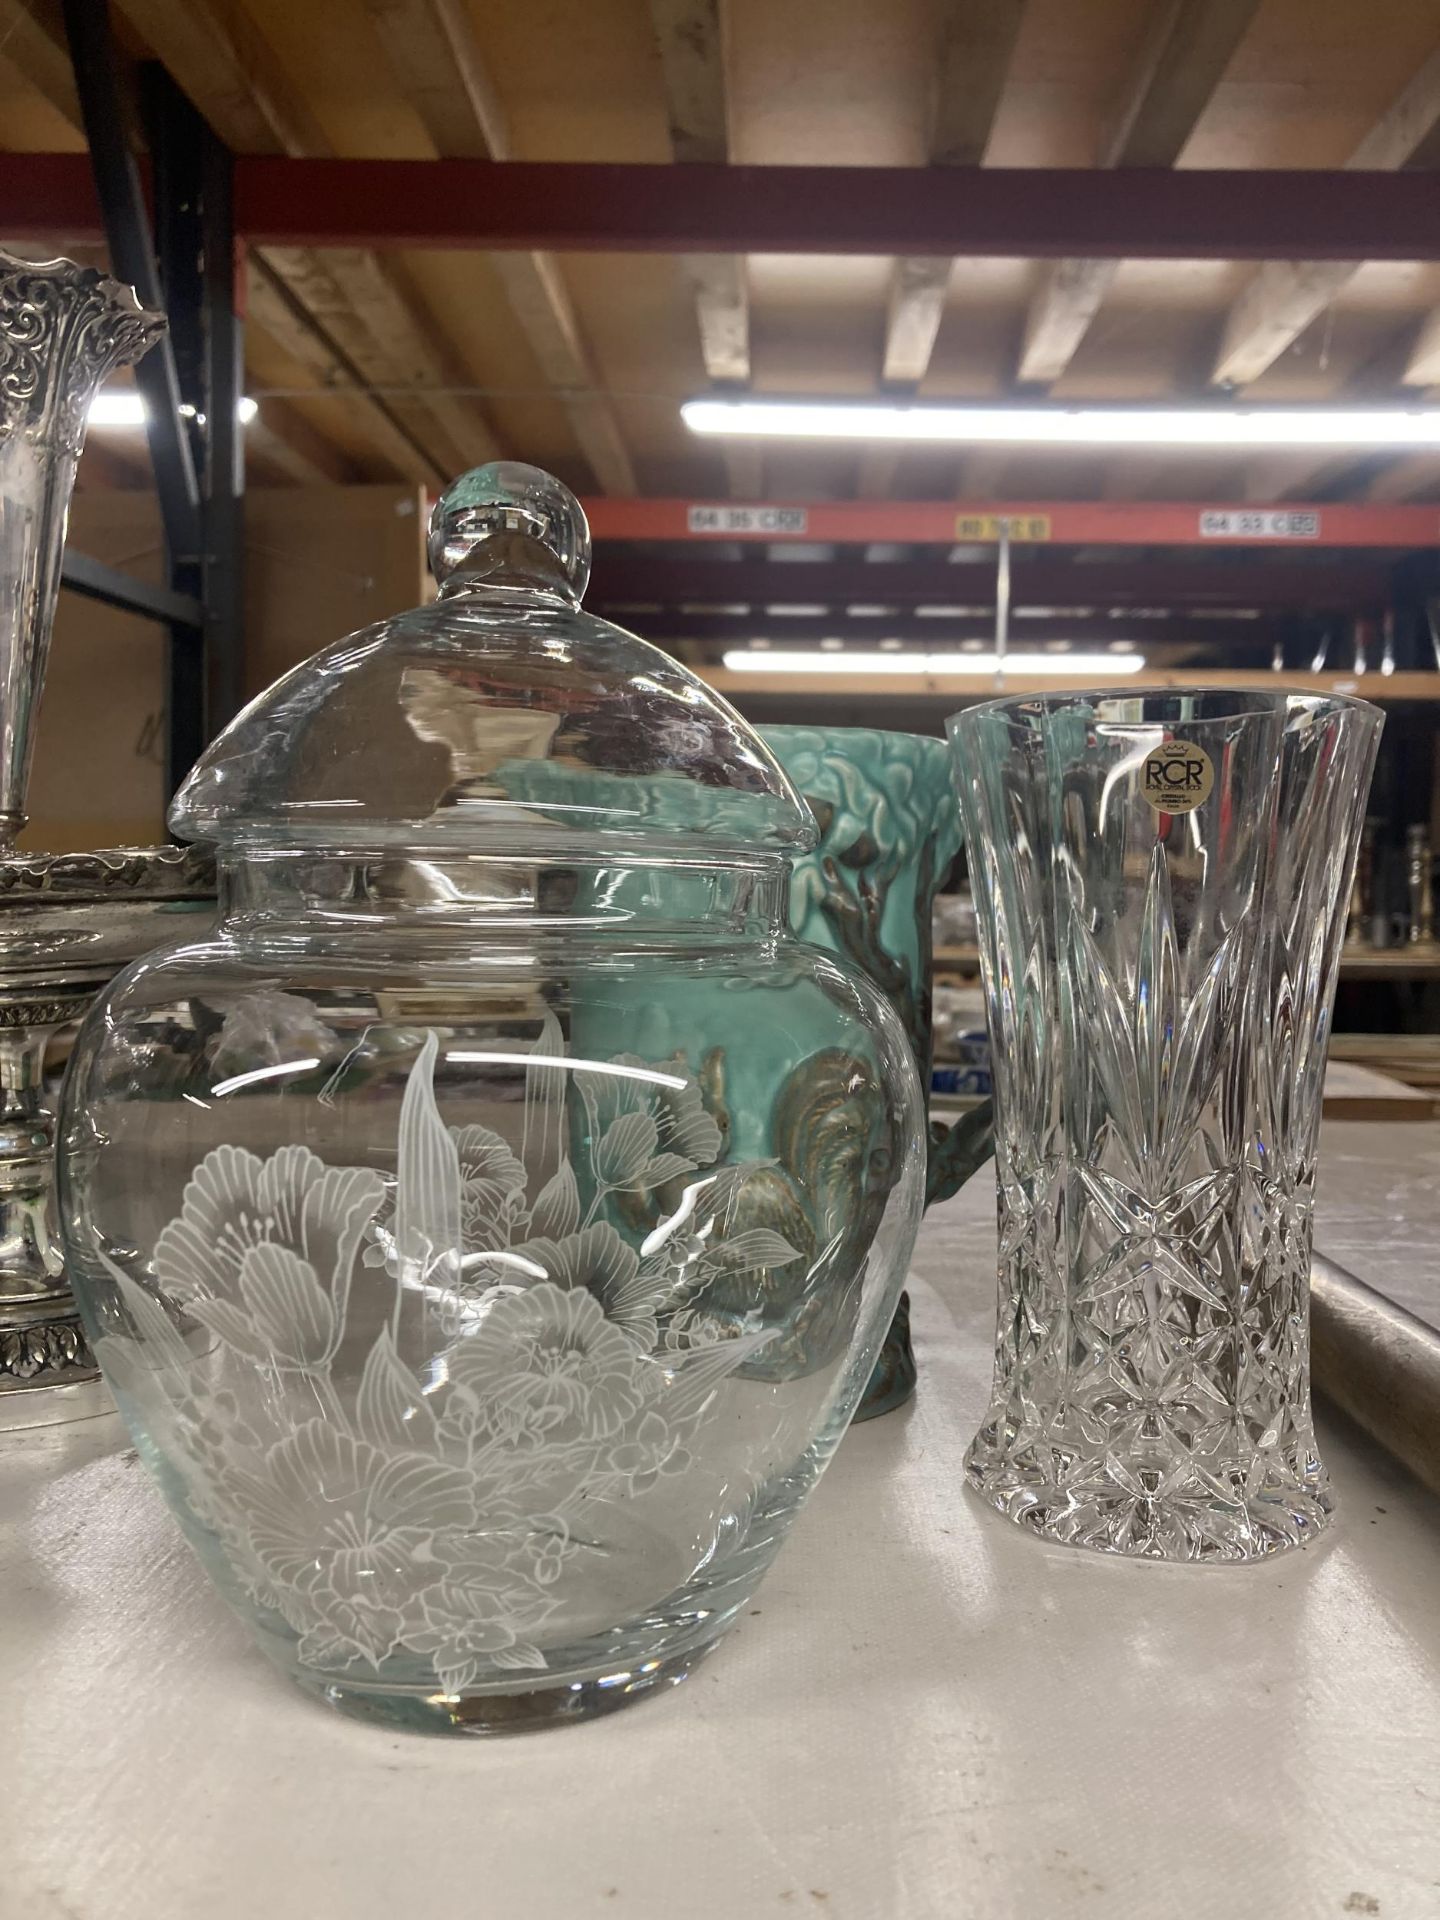 THREE ITEMS - FLORAL GLASS JAR, WADEHEATH SQUIRREL JUG AND RCR CRYSTAL VASE